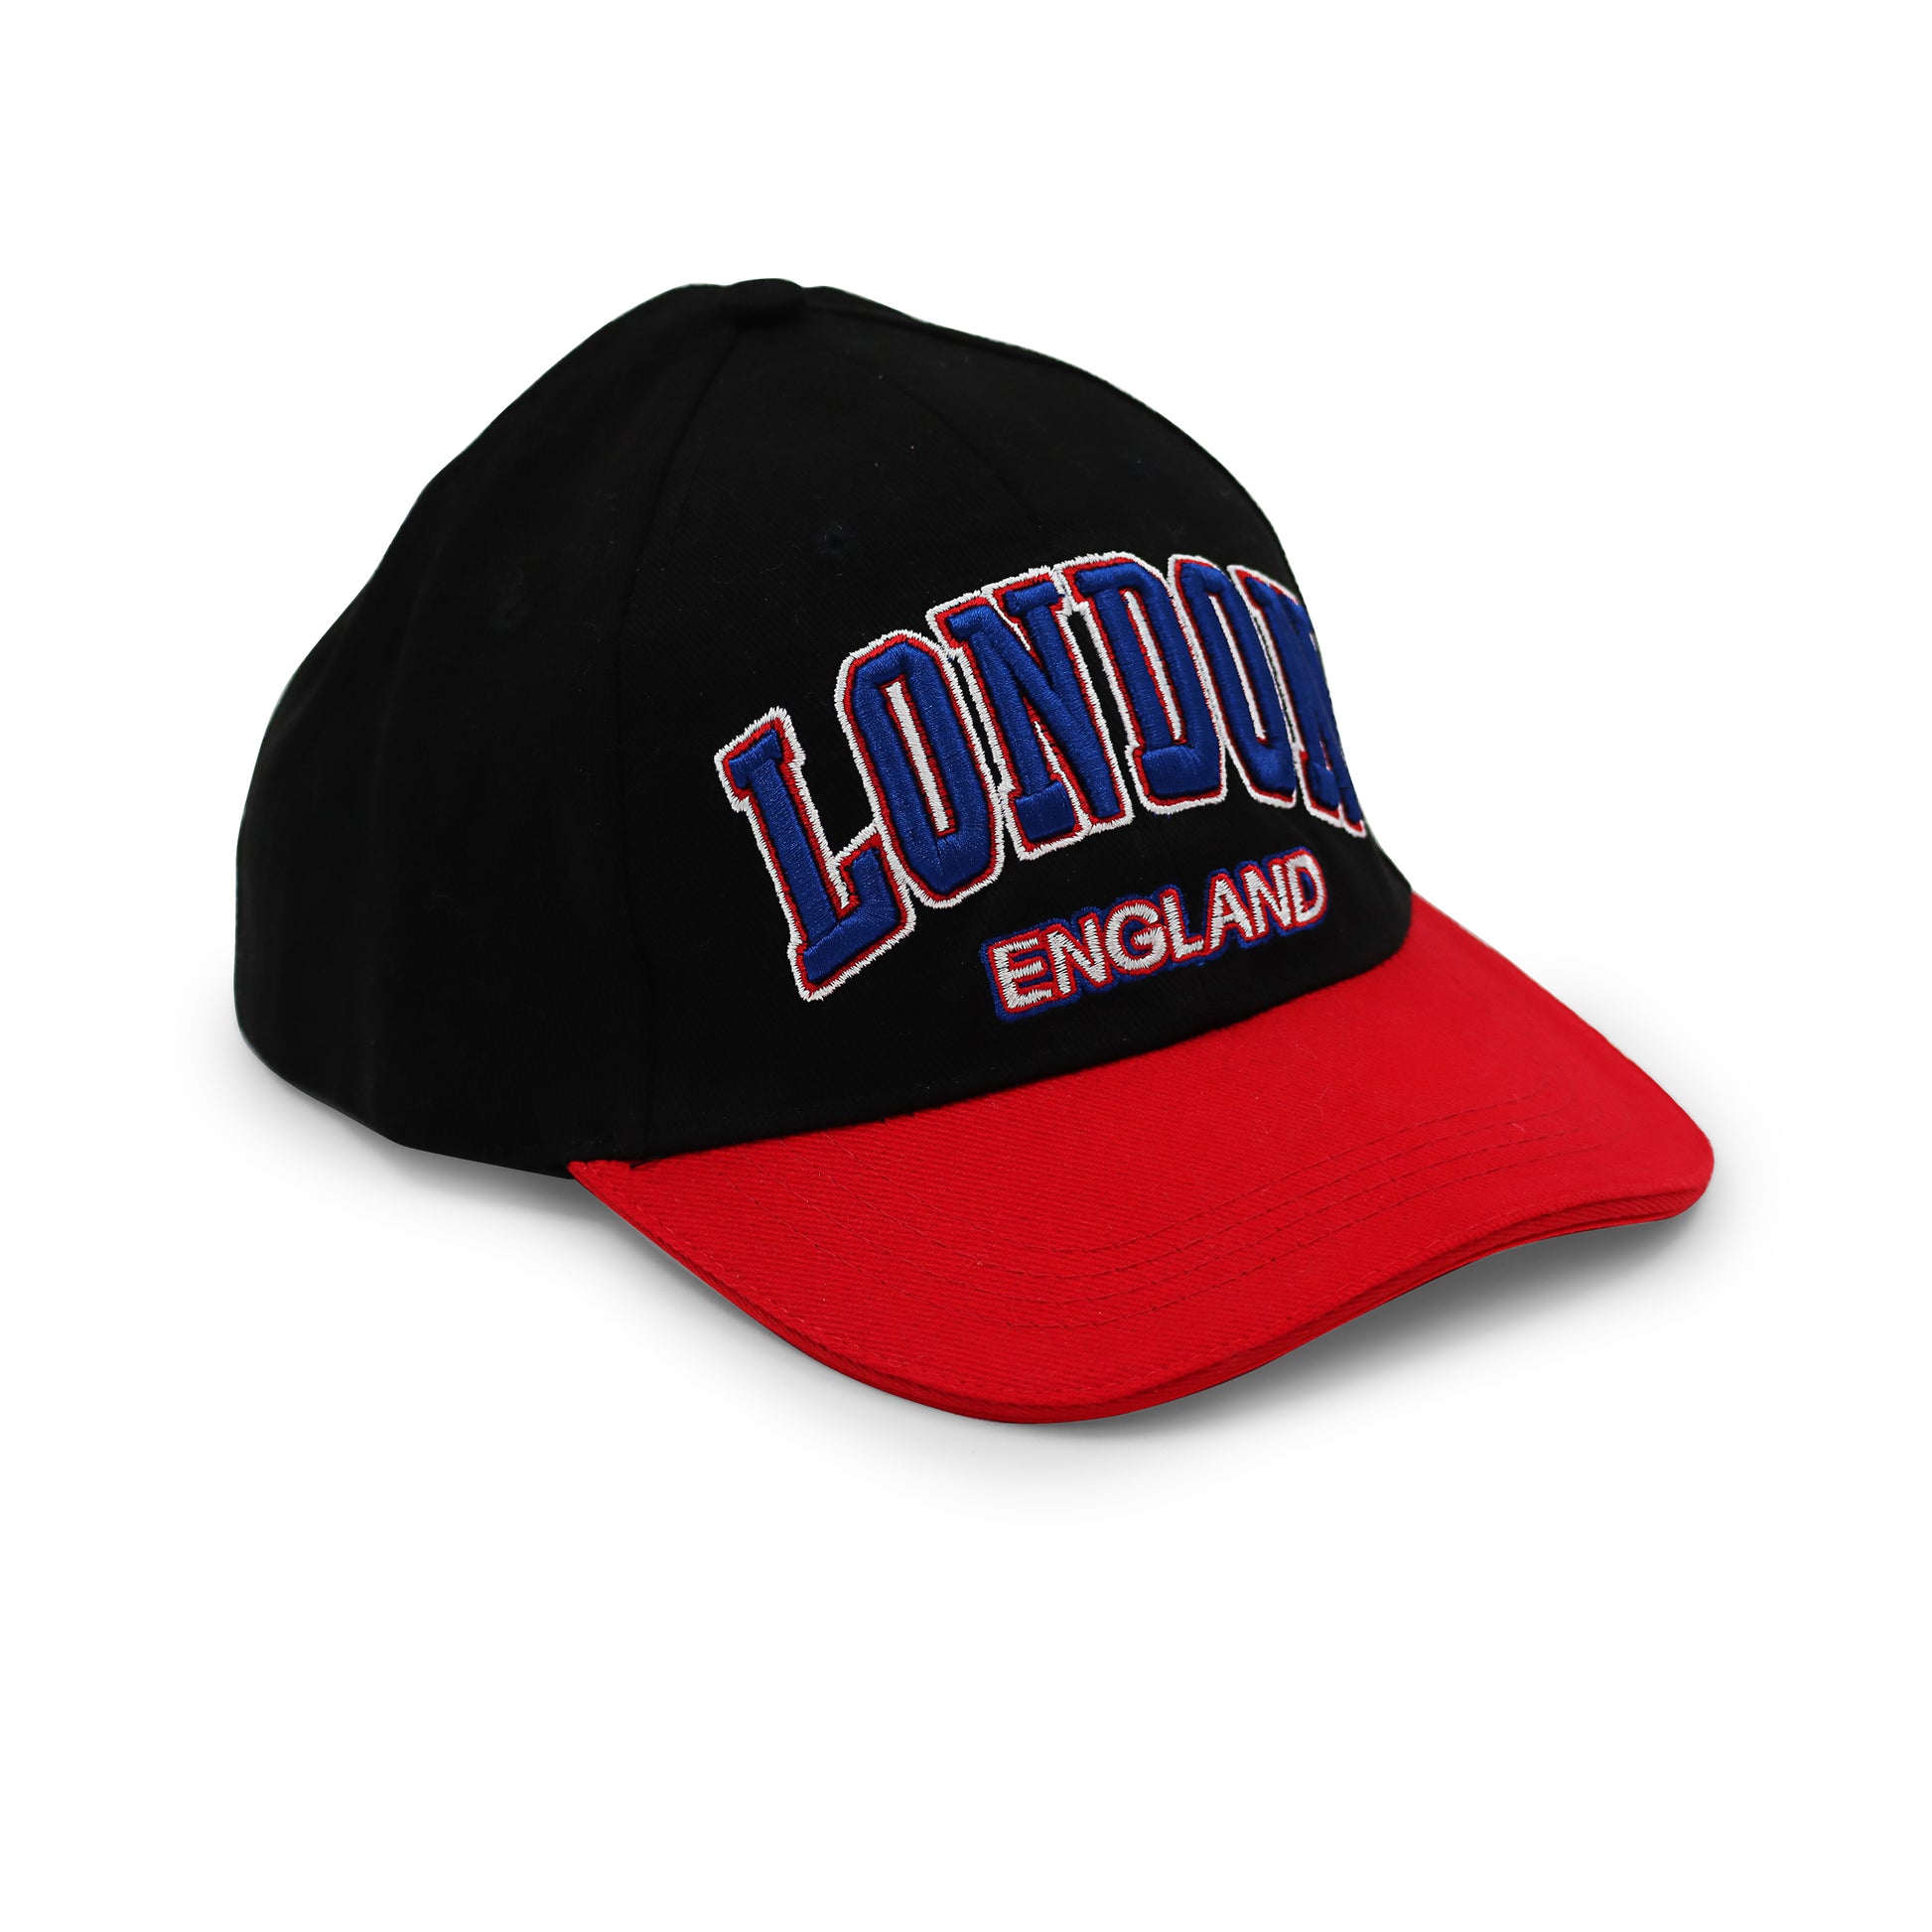 London England Cap